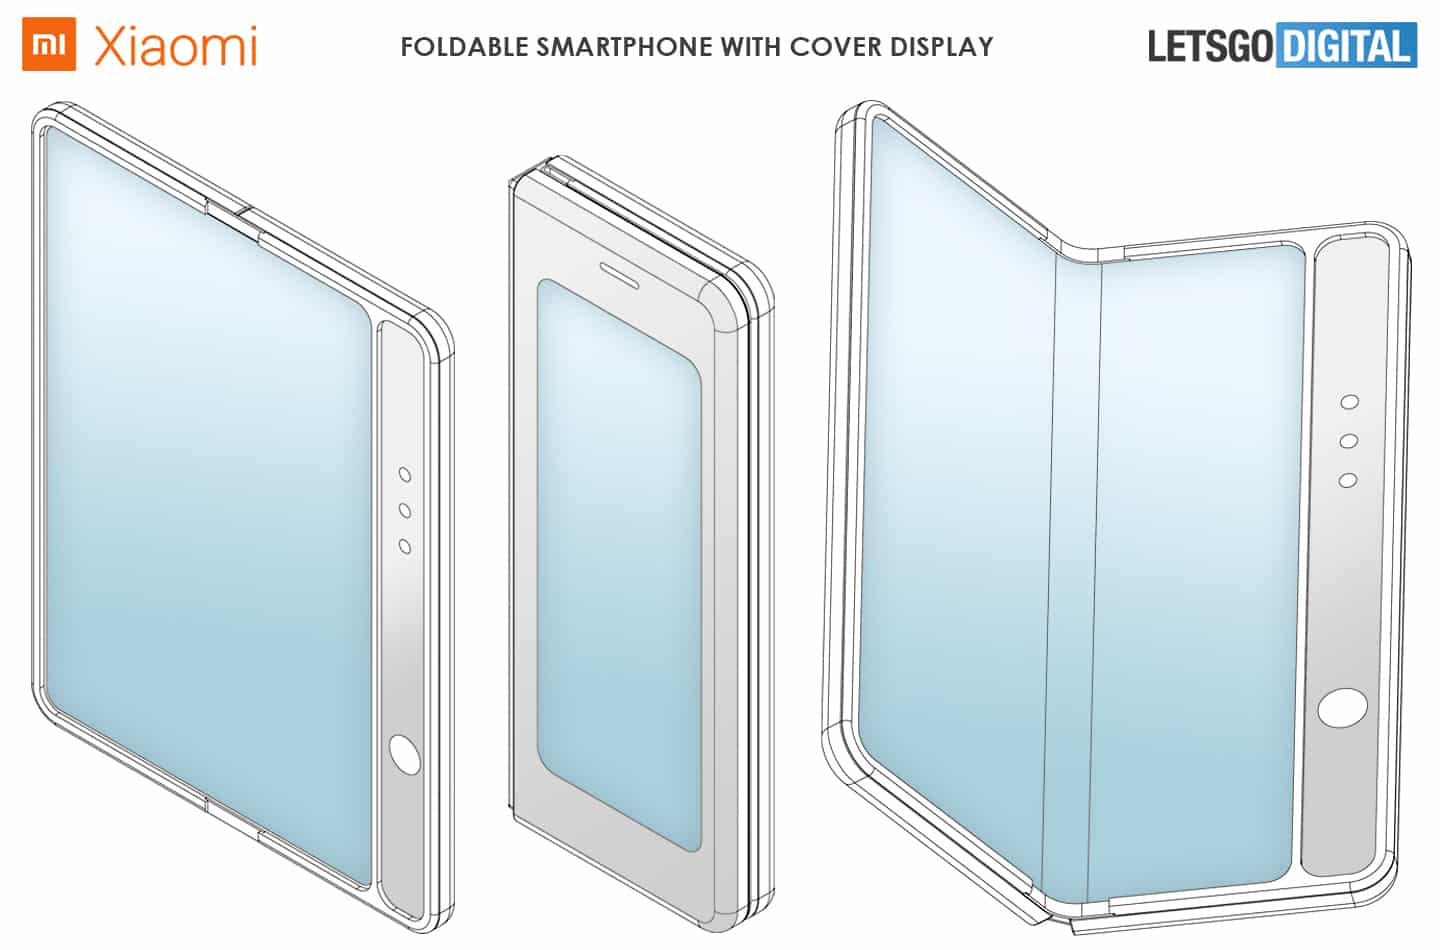 Ponsel Layar Lipat Xiaomi mirip dengan Samsung Galaxy Fold?